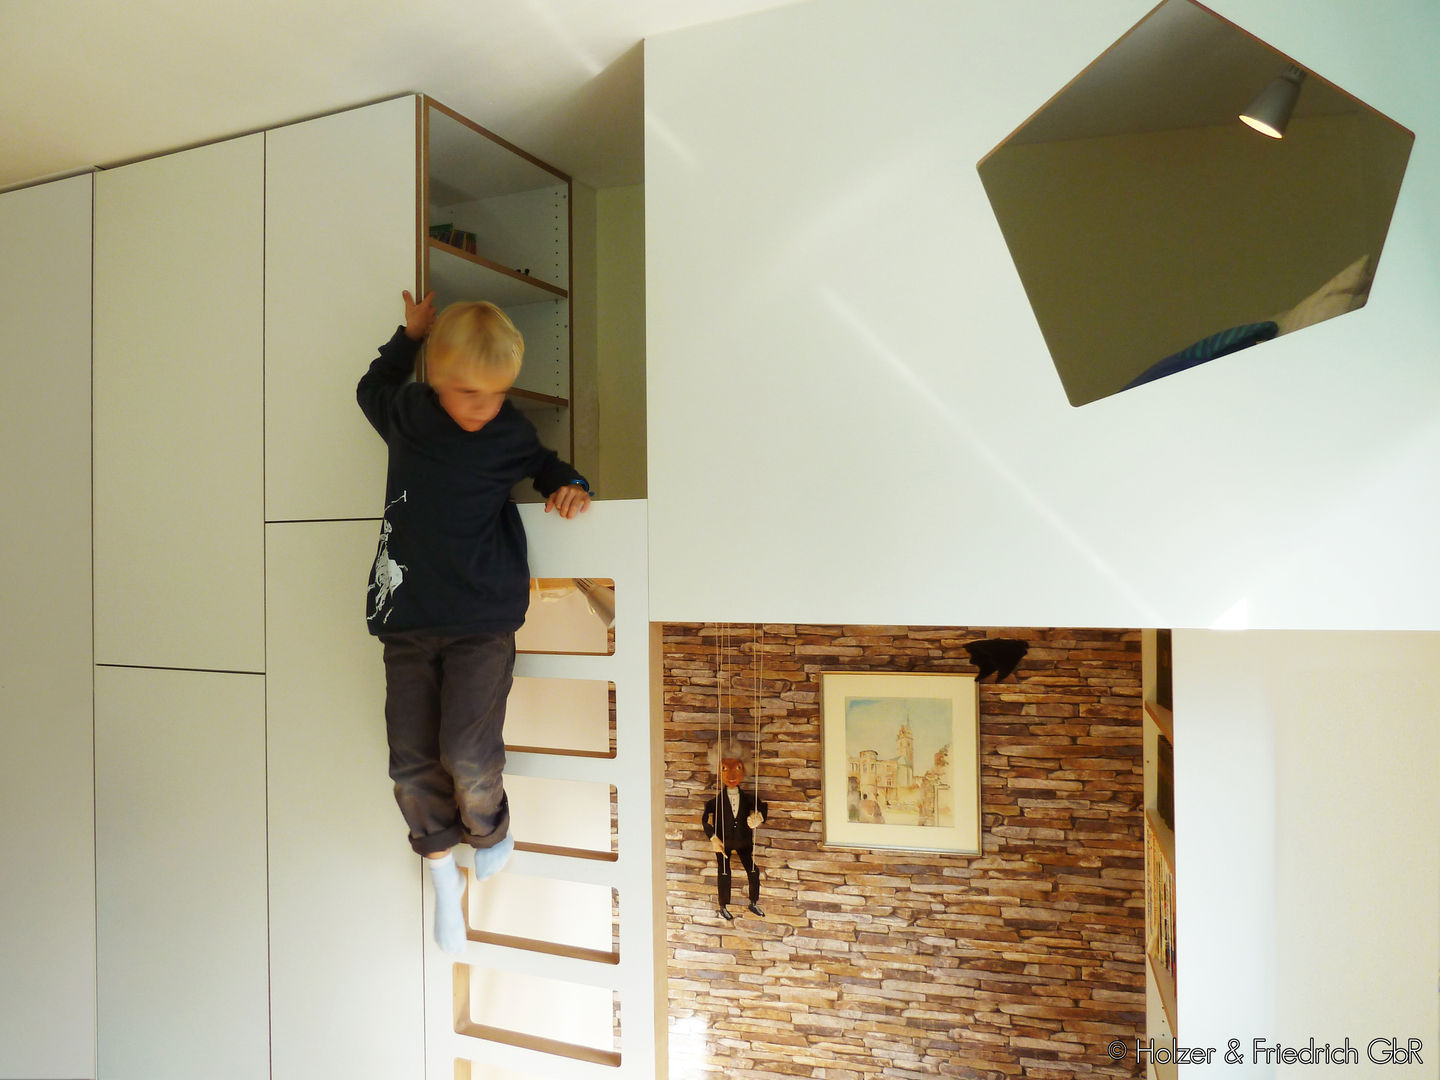 Jonas' Kinderzimmer, Holzer & Friedrich GbR Holzer & Friedrich GbR Dormitorios infantiles modernos: